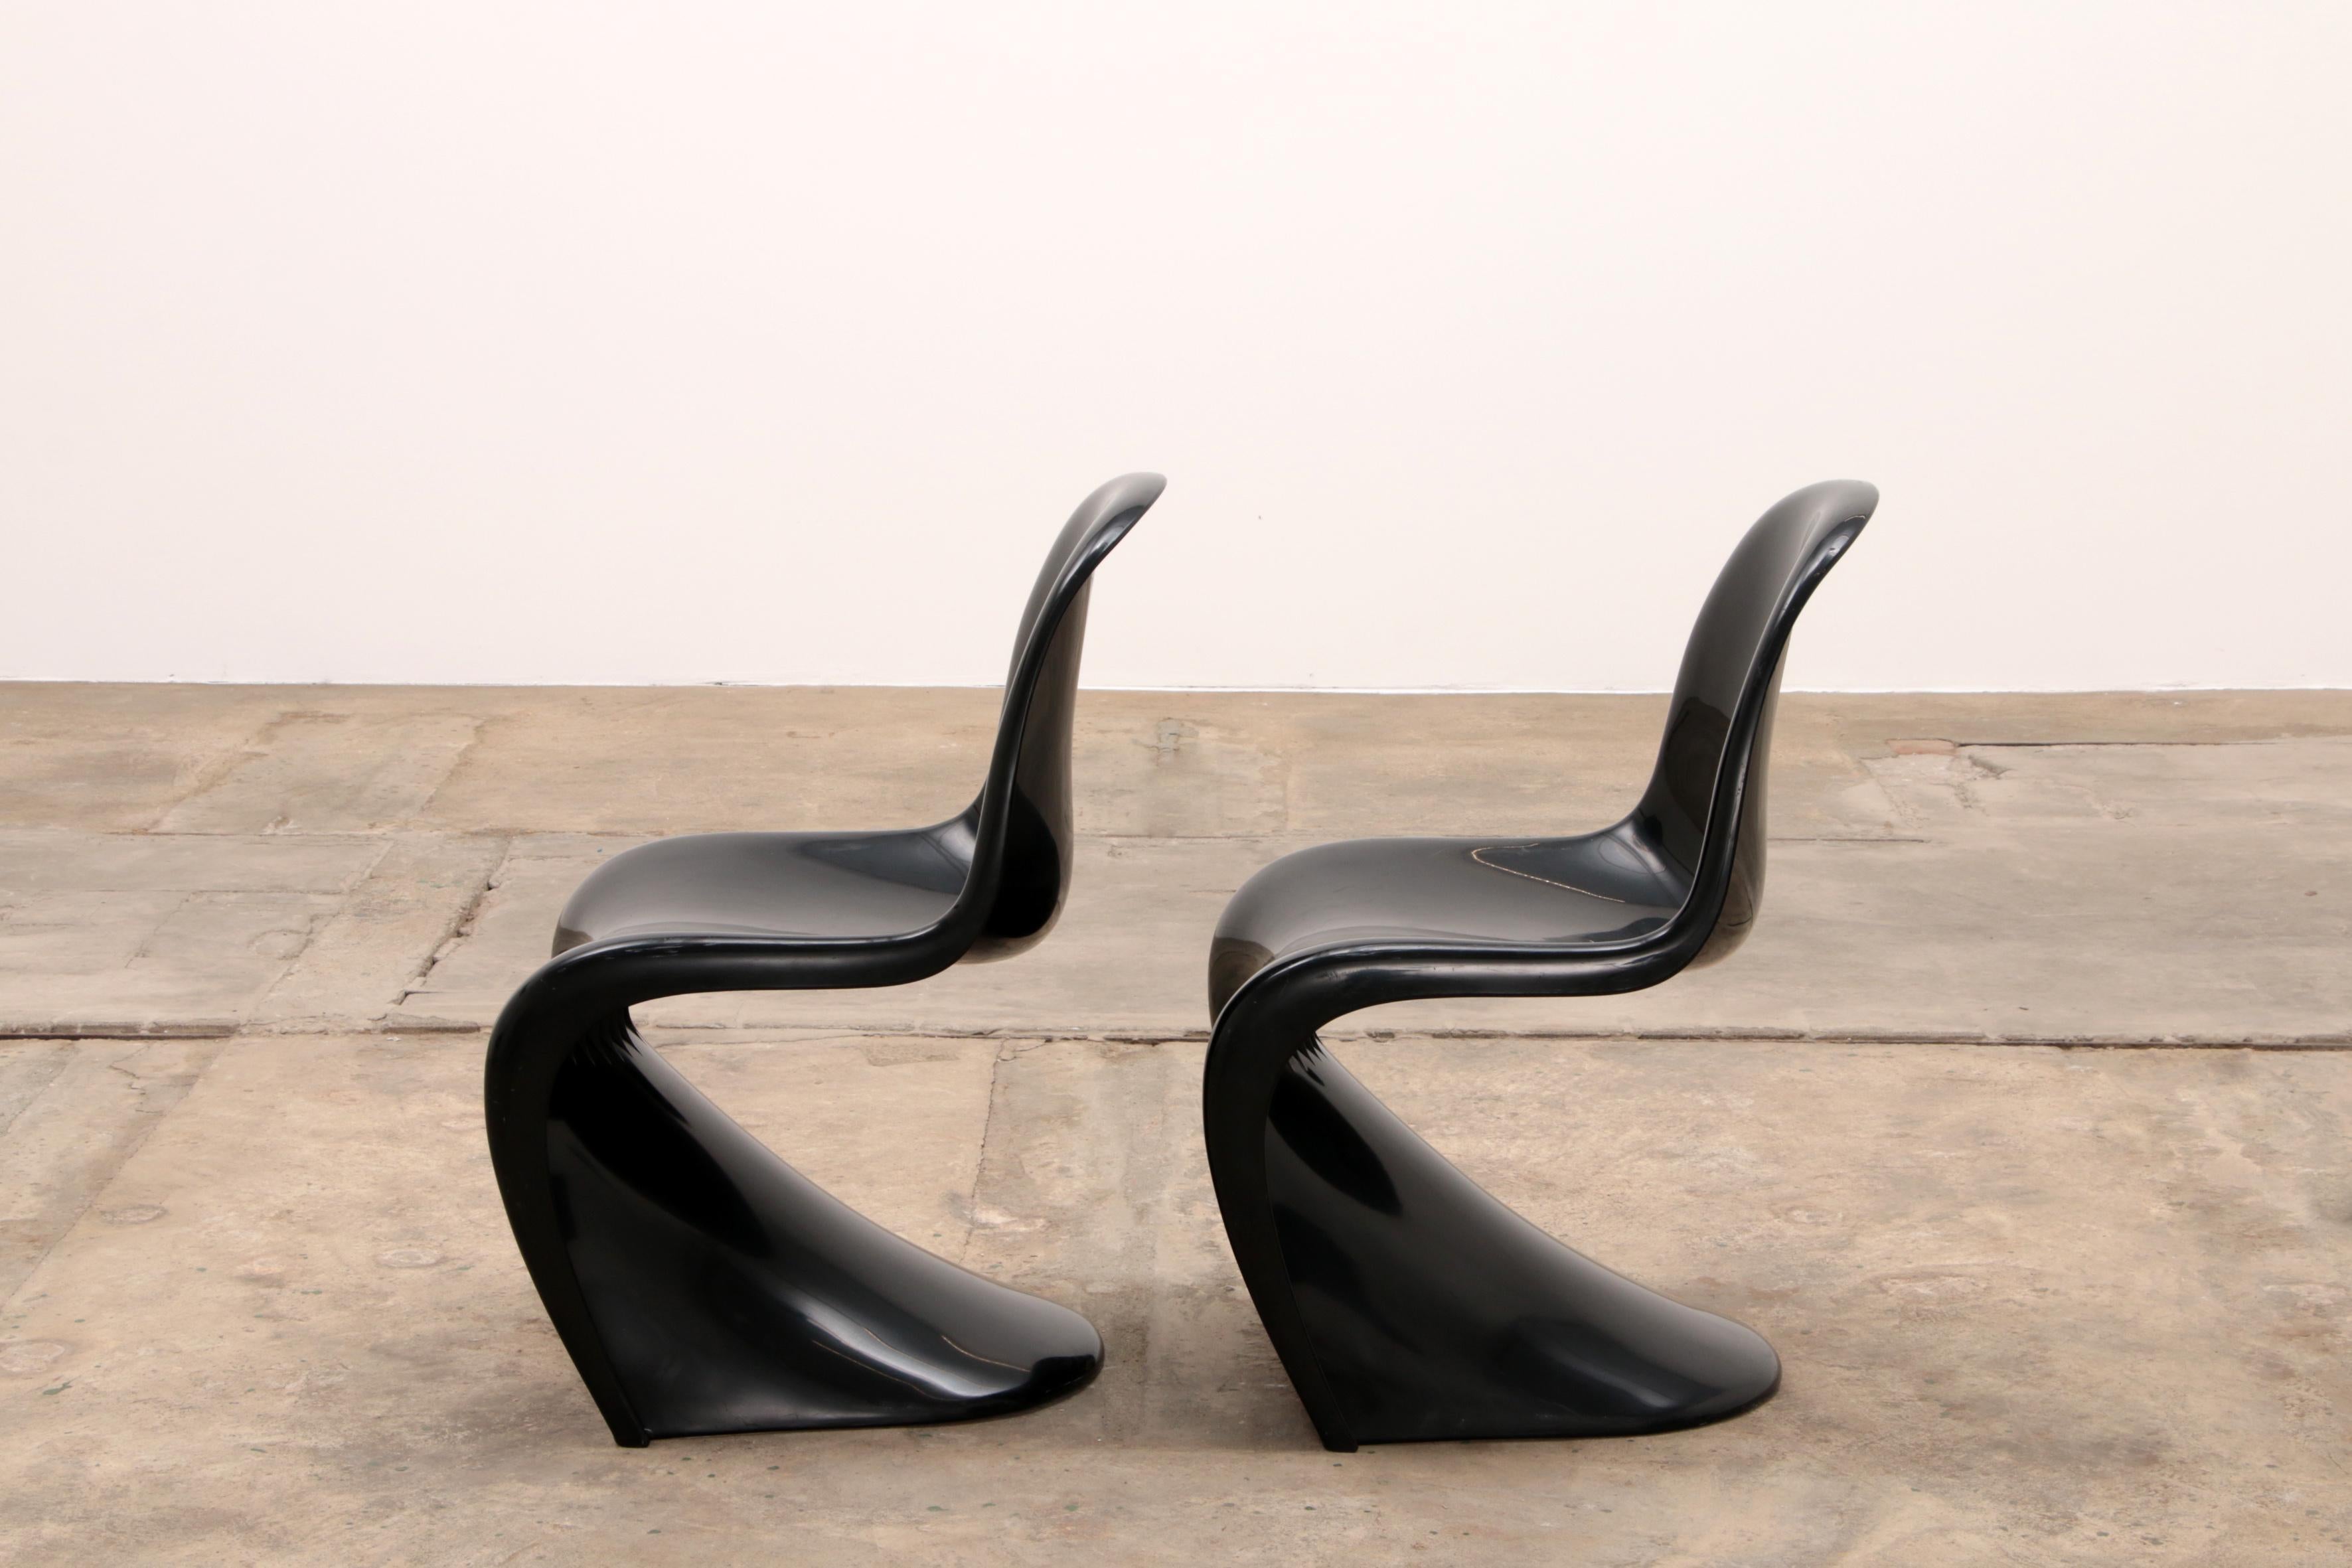 Swiss Set of 2 Verner Panton Chairs Made by Herman Miller, 1971